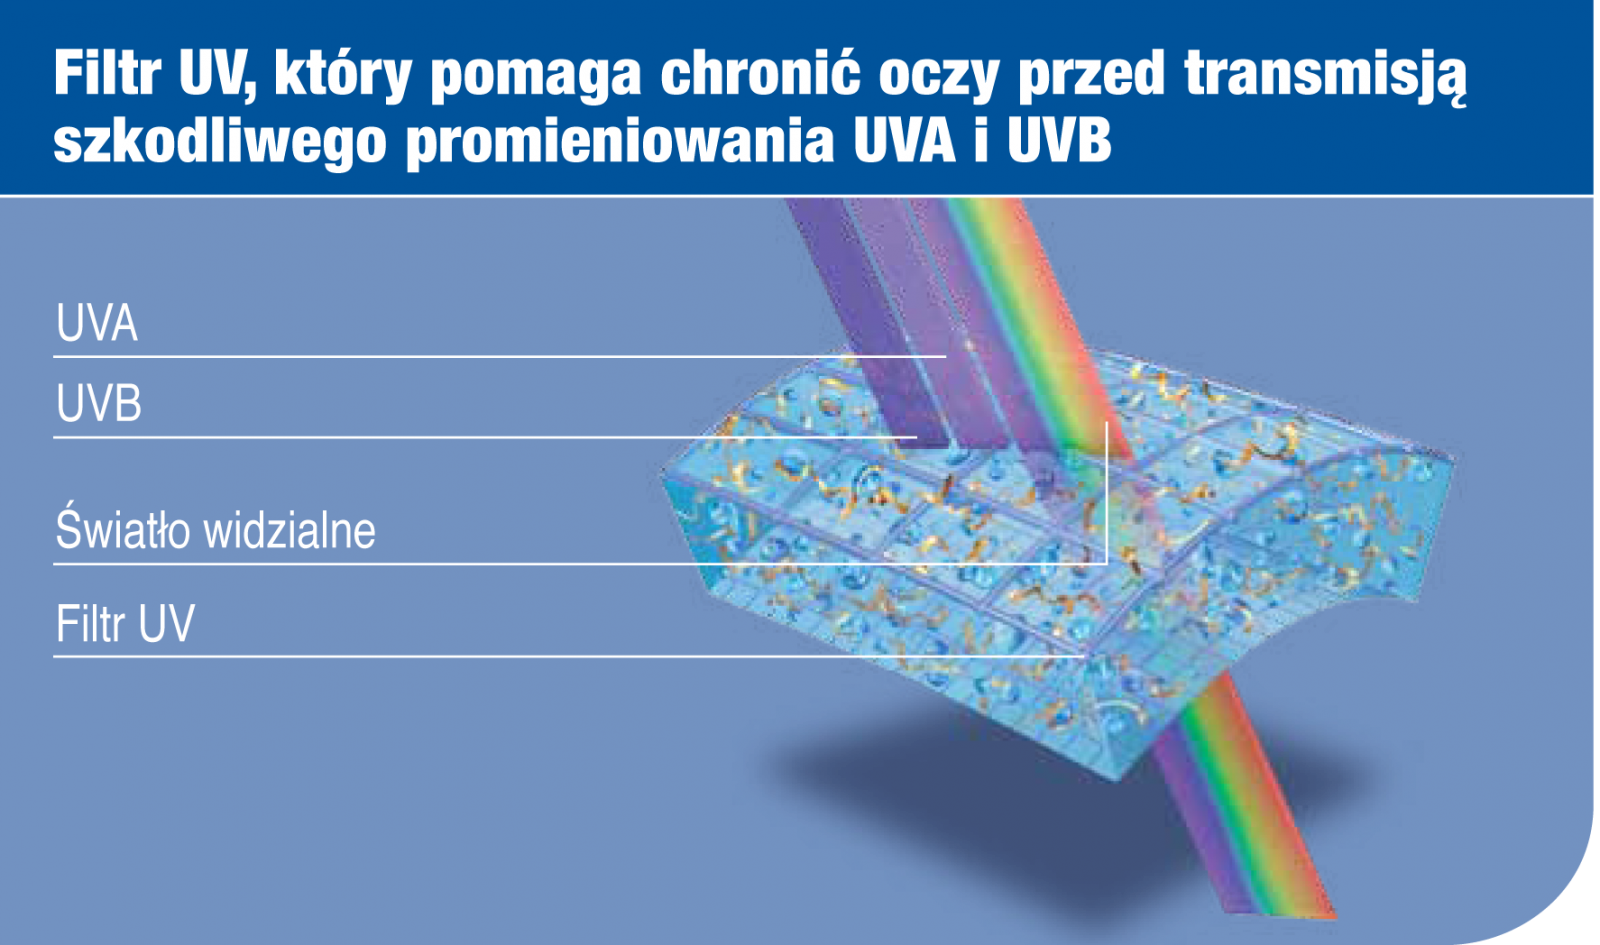 UV transmission graph